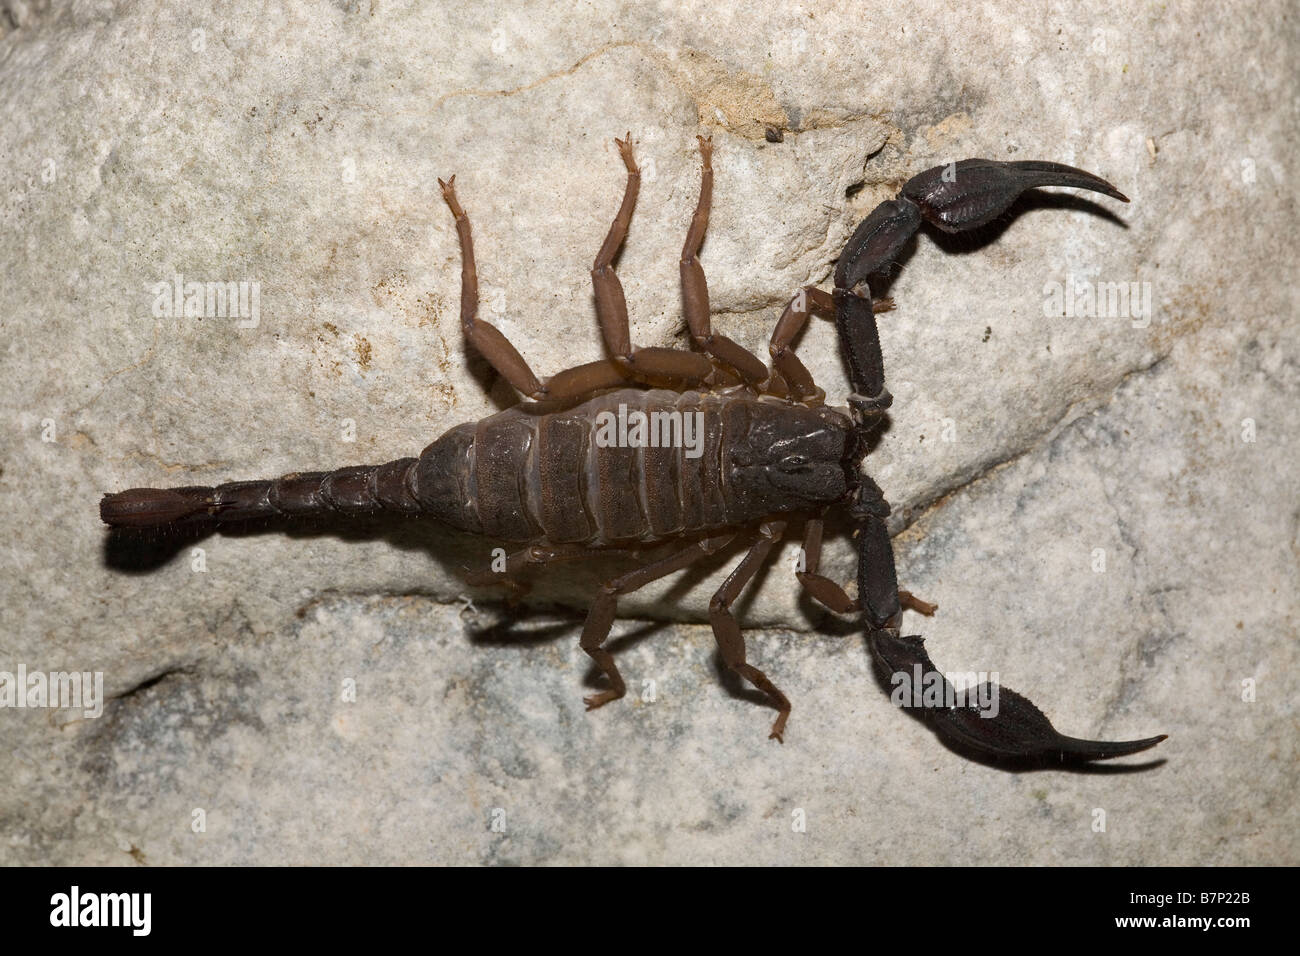 Scorpion Iurus dufoureius el Mani sur del Peloponeso Grecia Foto de stock